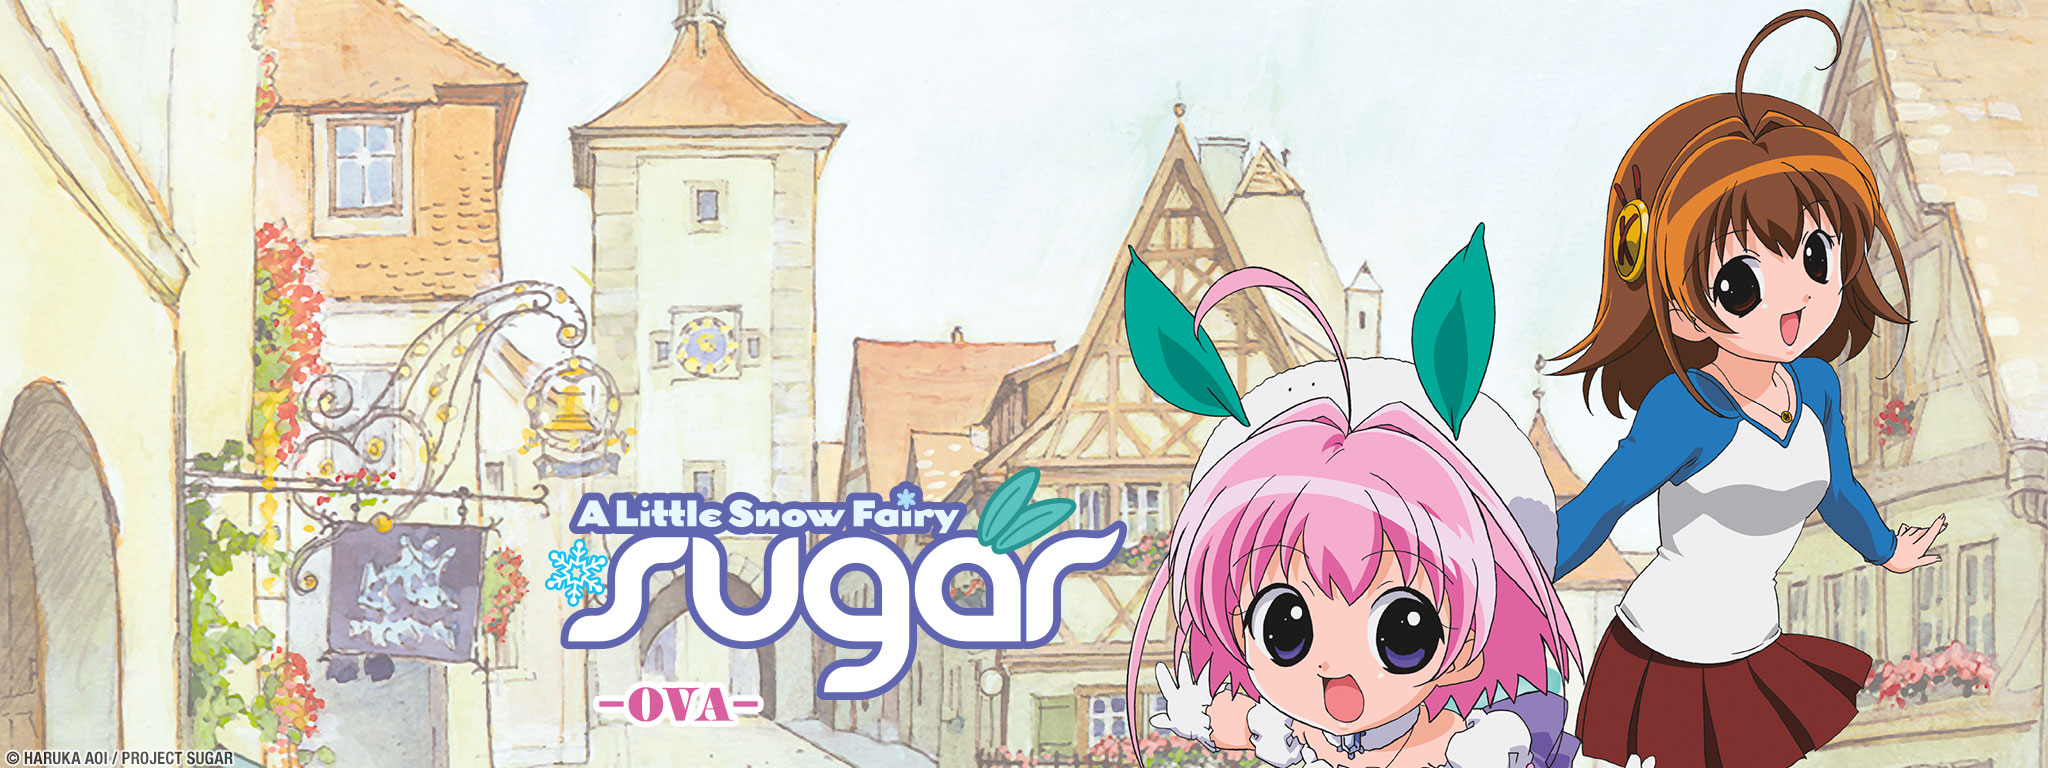 Title Art for A Little Snow Fairy Sugar OVA